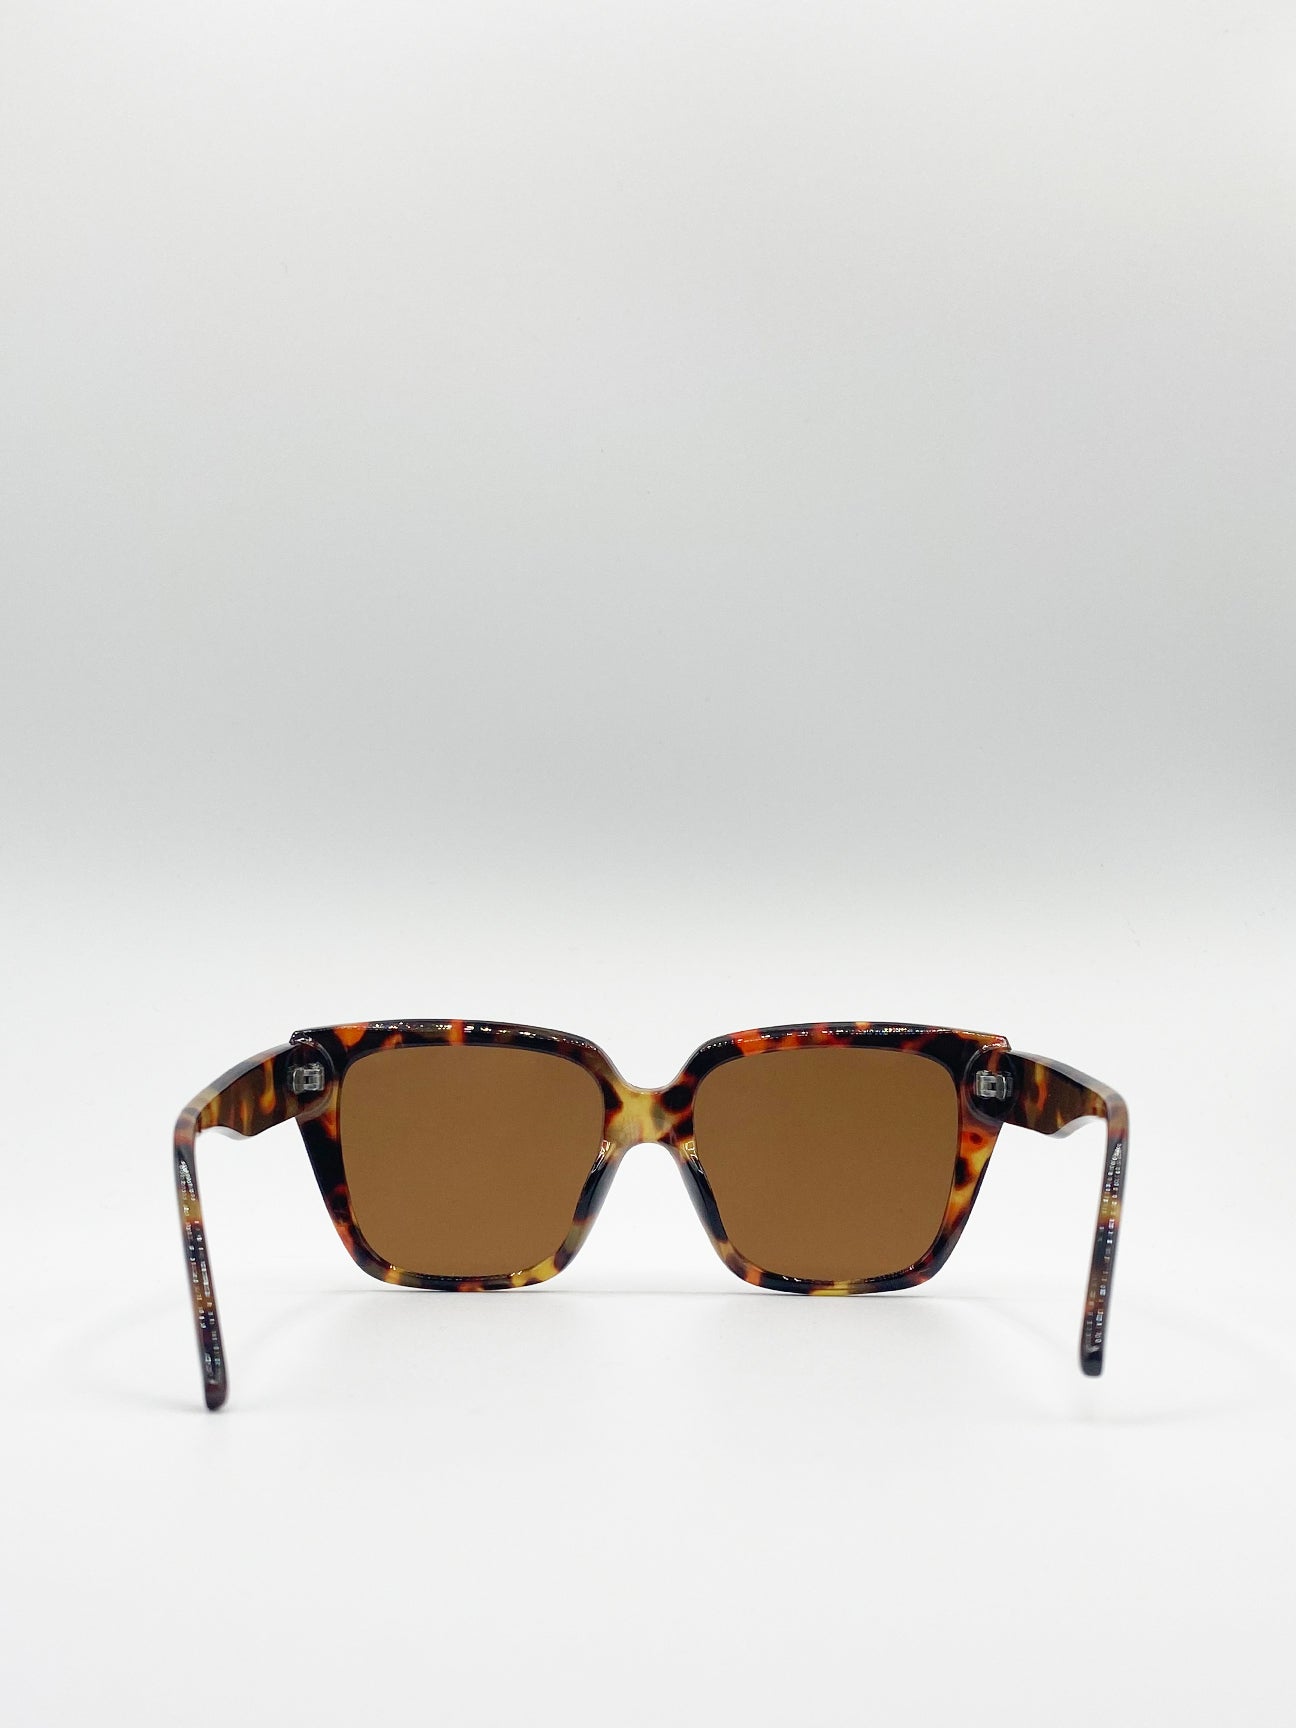 Cateye Sunglasses In Tortoise